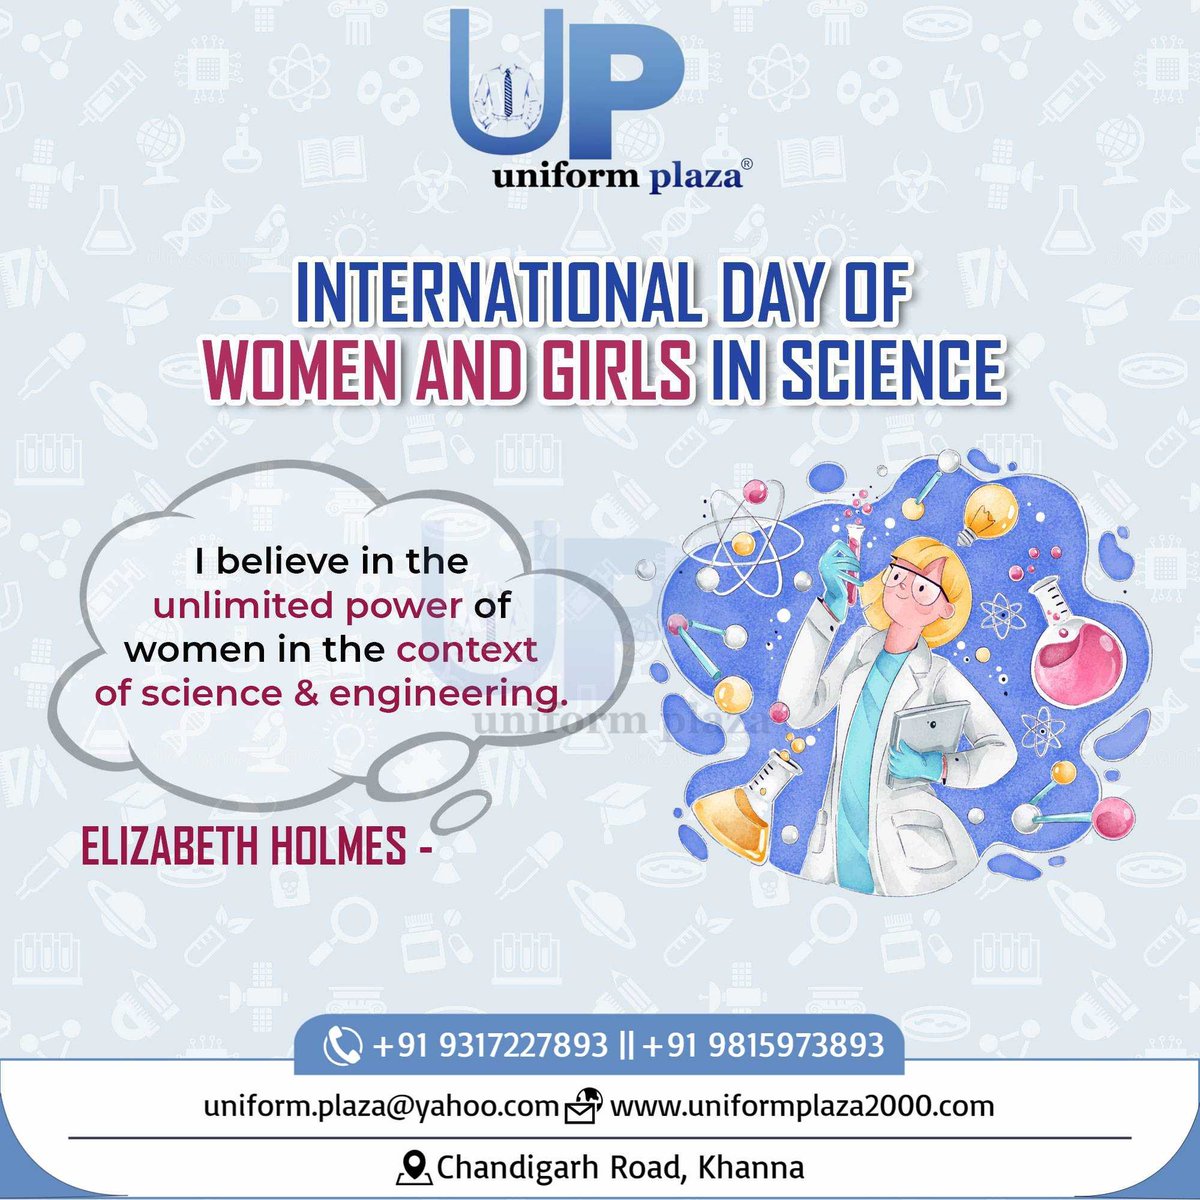 Greetings from Uniform Plaza
                    #research #womendoingscience #womenintech #womenscientists #girlswhocode #InternationalDayWomenandgirlsinscience #researchlife #scienceisreal #sciencelovers #womenpower #UniformPlaza